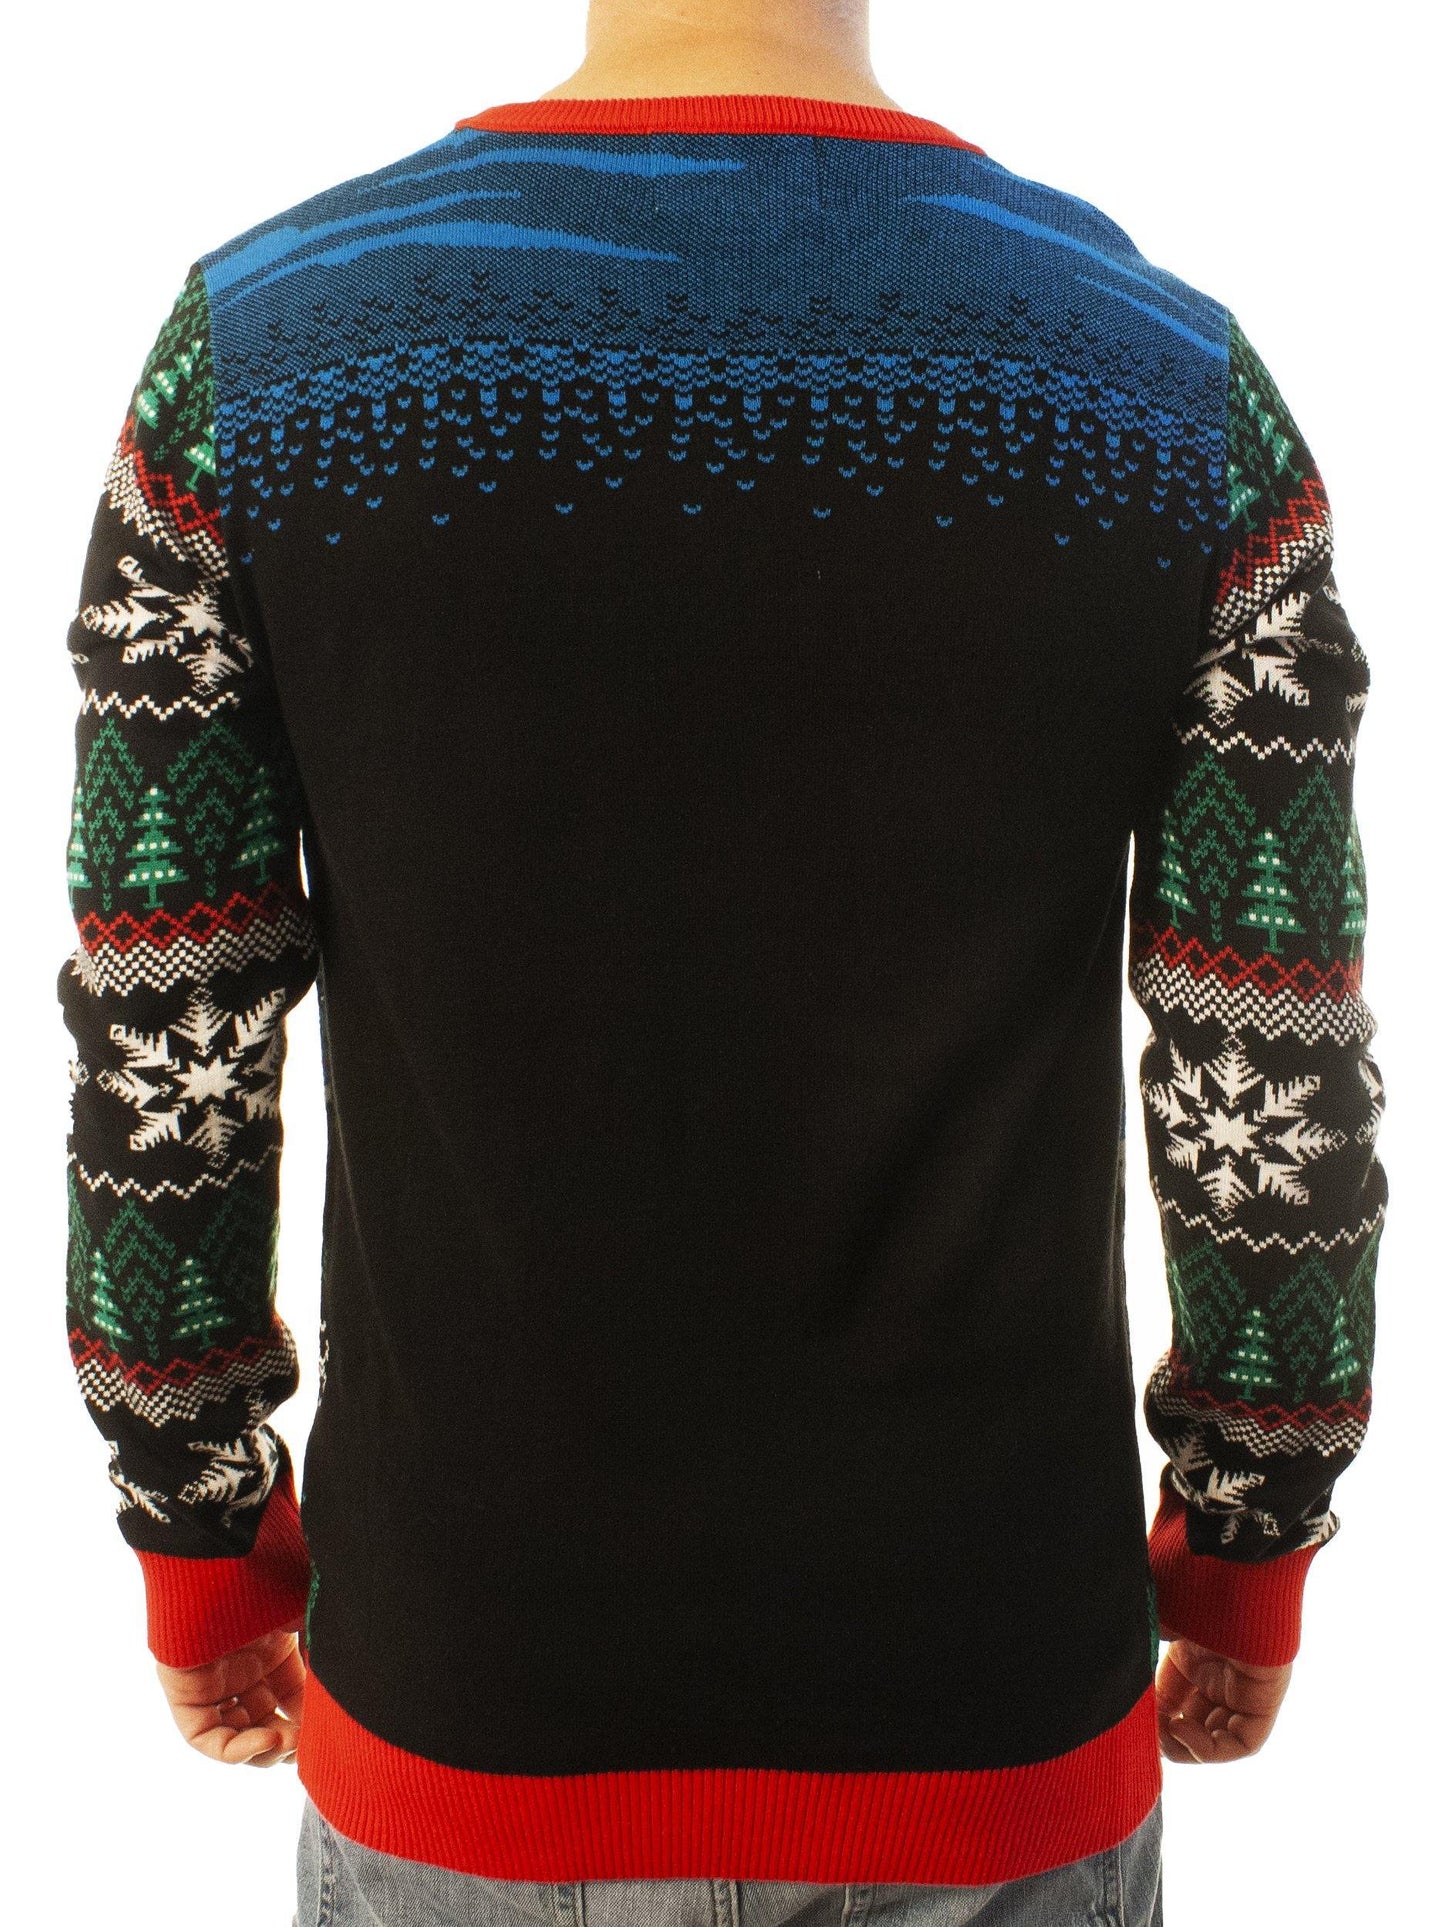 Merry Christmas Jesus Ugly Christmas Sweater - Best Xmas Gifts 2022 - Jesus Christ Sweater - God Gifts Idea